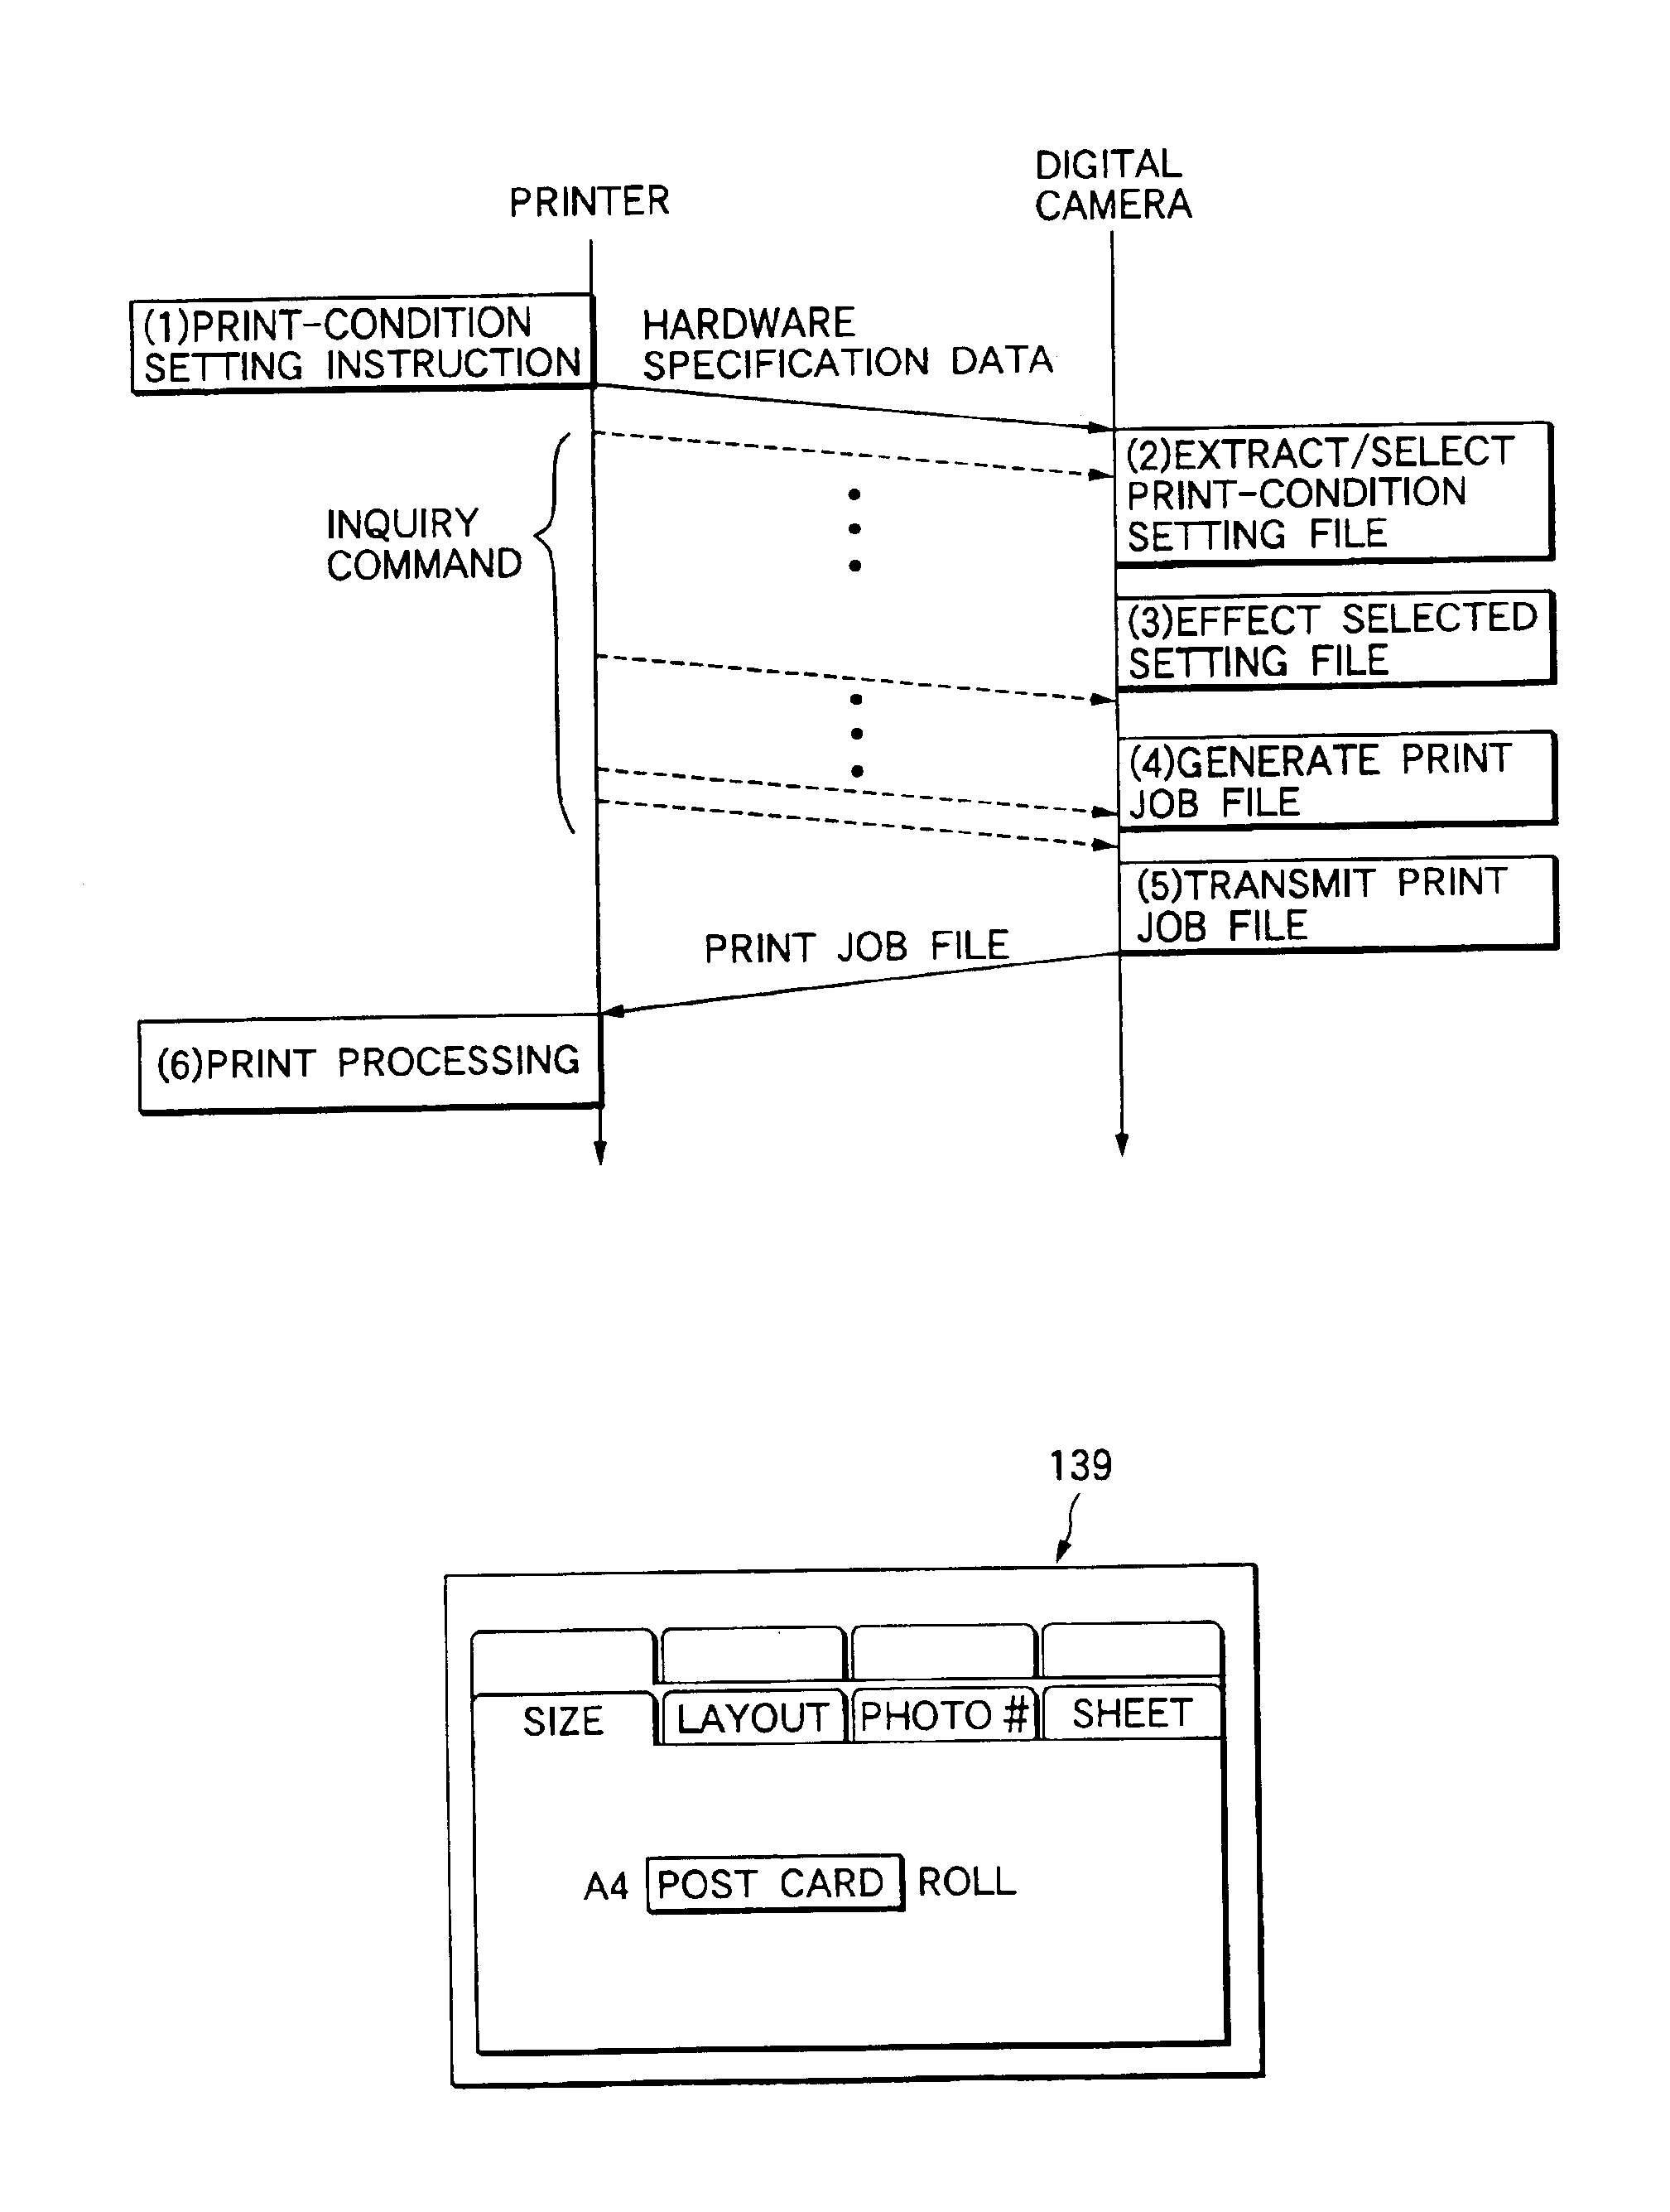 Printer and print-condition setting method for the same